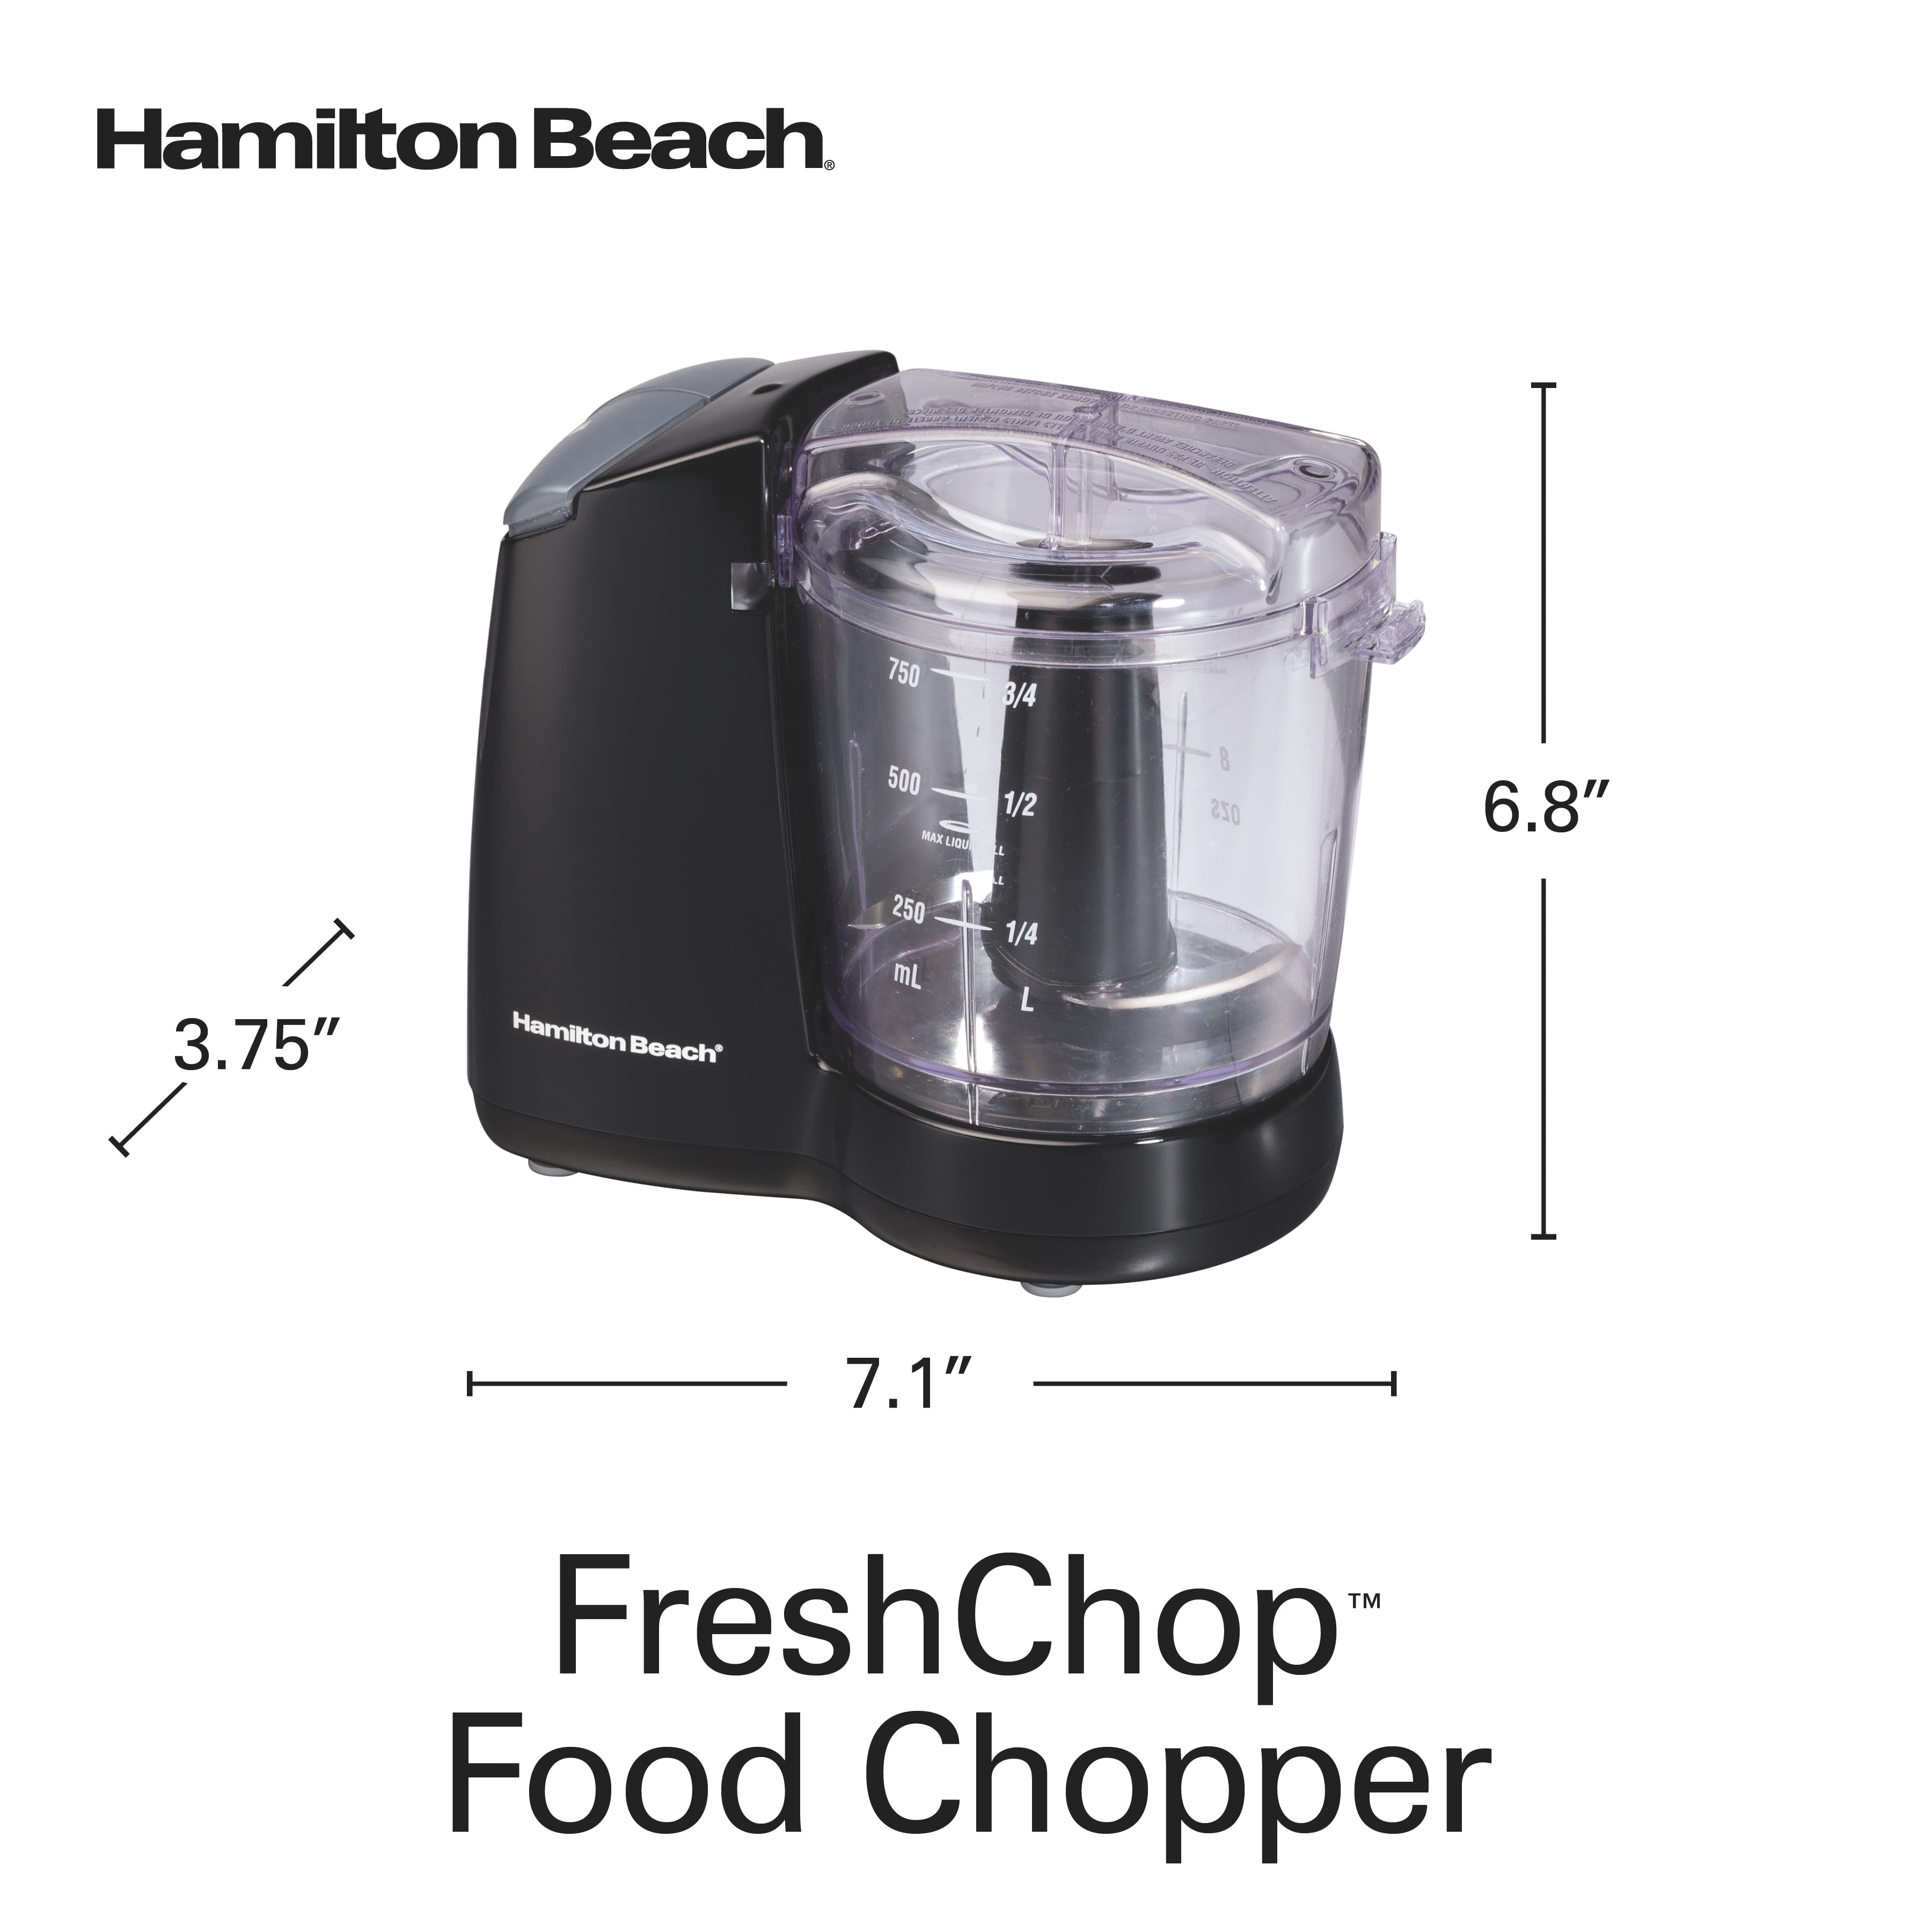 Hamilton Beach Black 3 cups Food Chopper 80 W - Ace Hardware